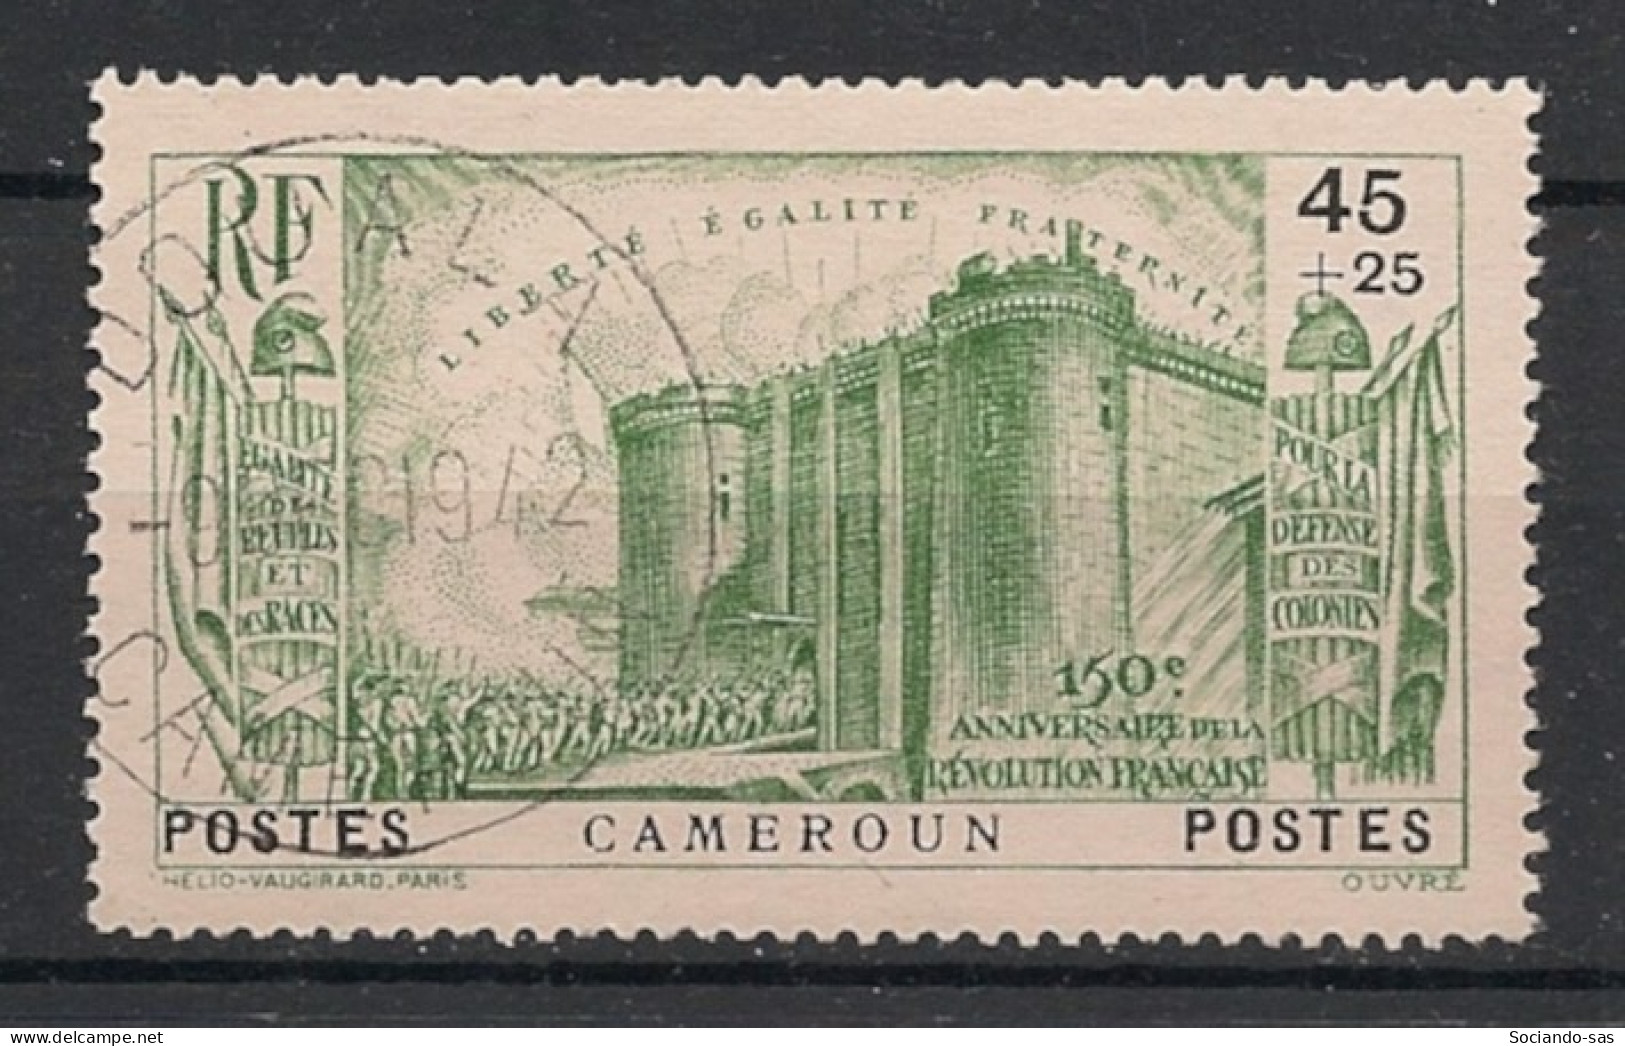 CAMEROUN - 1939 - N°YT. 192 - Révolution Française 45c + 25c Vert - Oblitéré / Used - Used Stamps